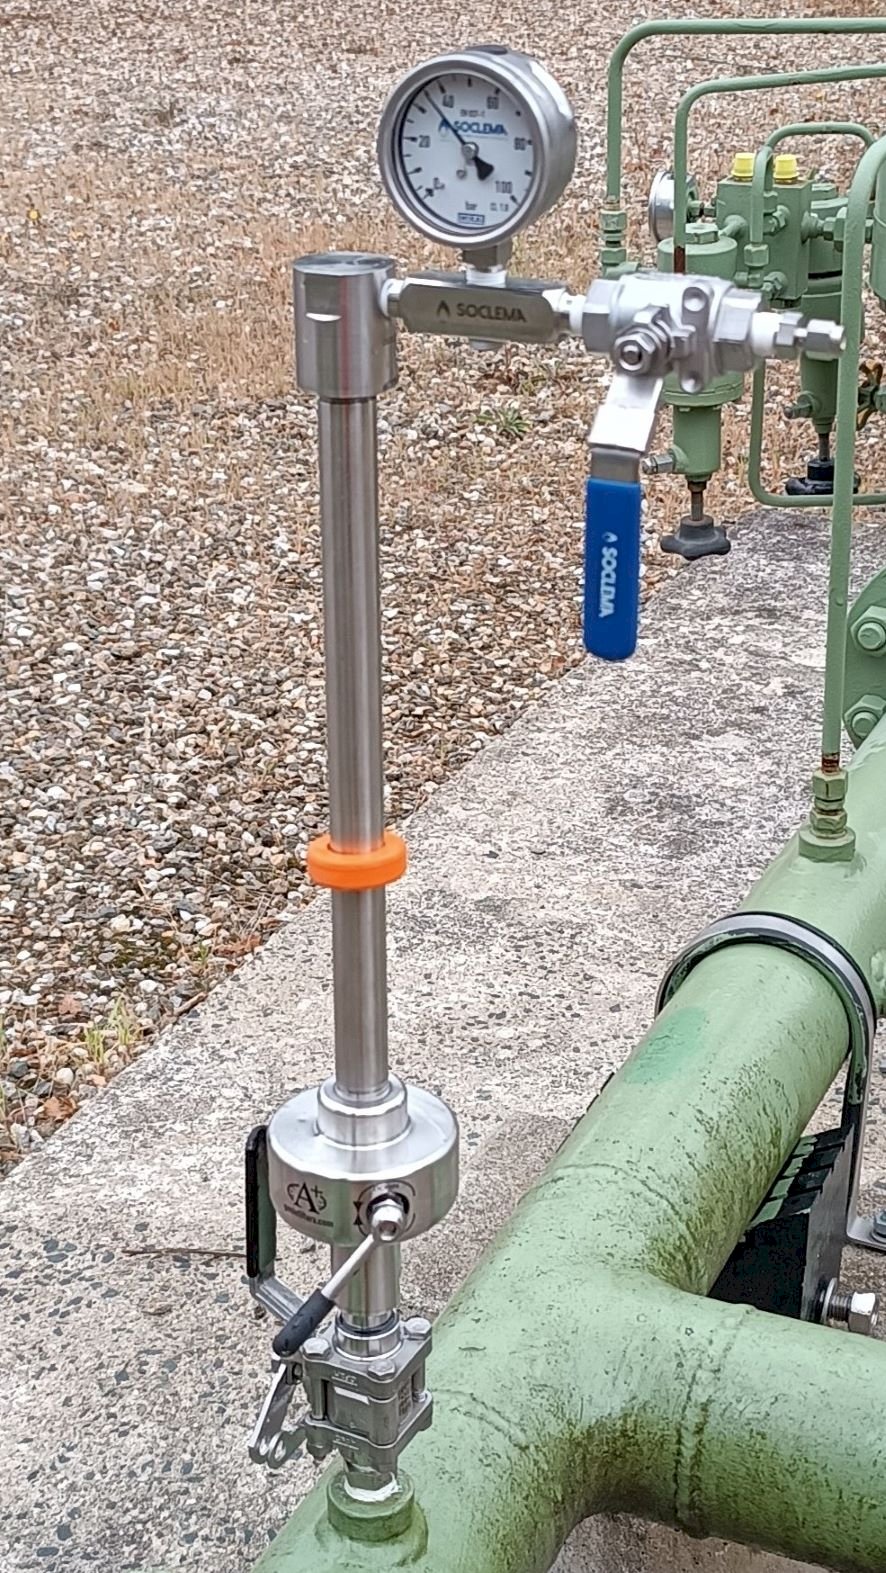 GENIE 701 sampling manifold installed on gas site